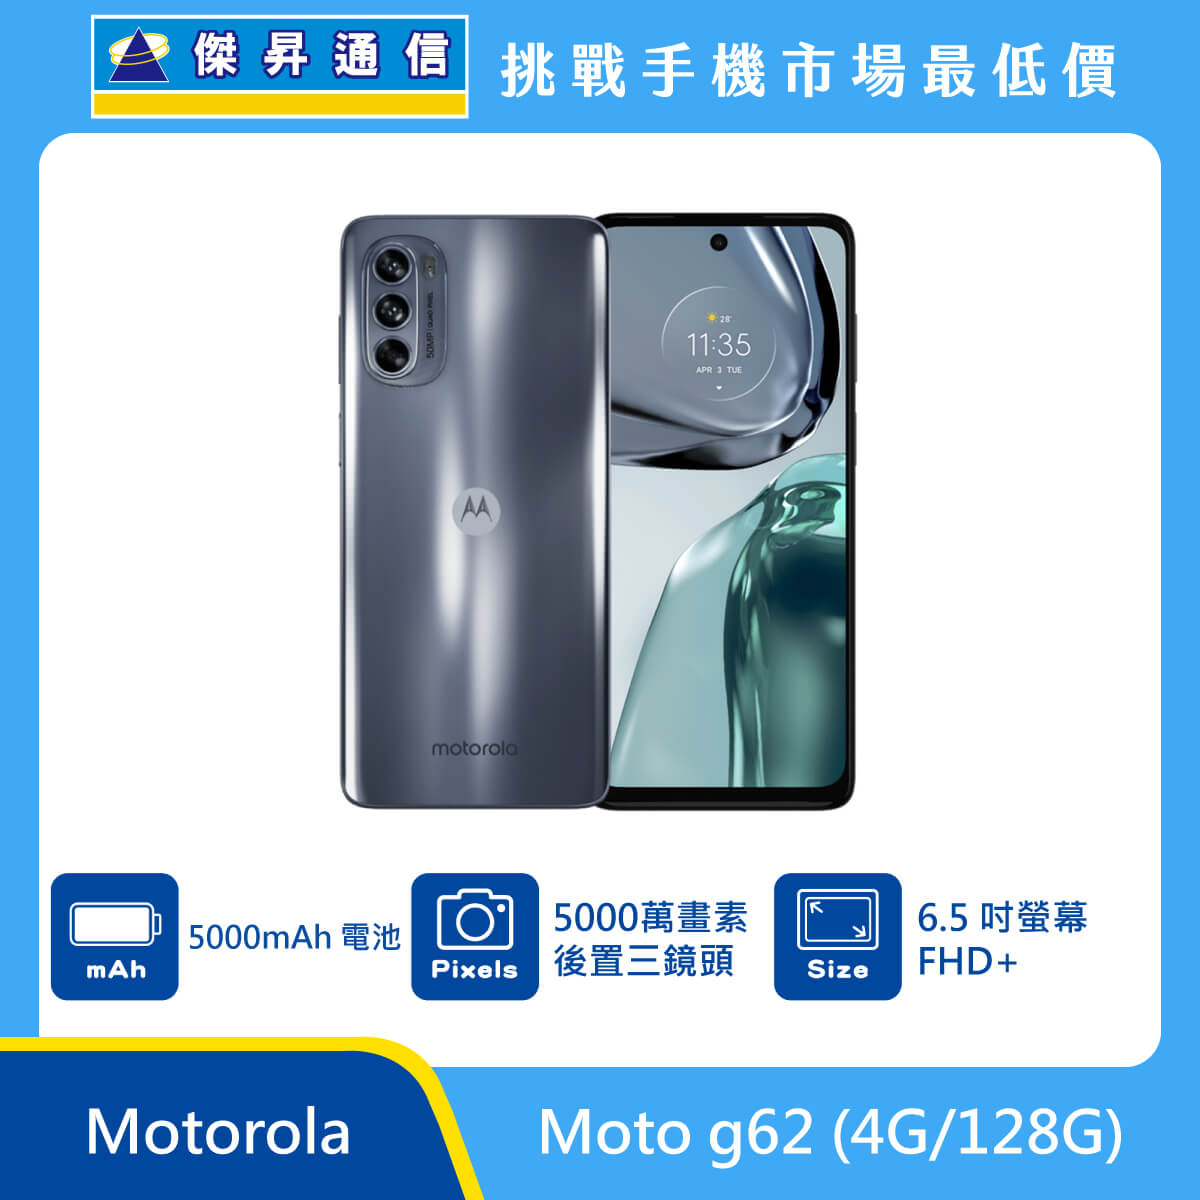 Motorola Moto g62 (4G/128G)